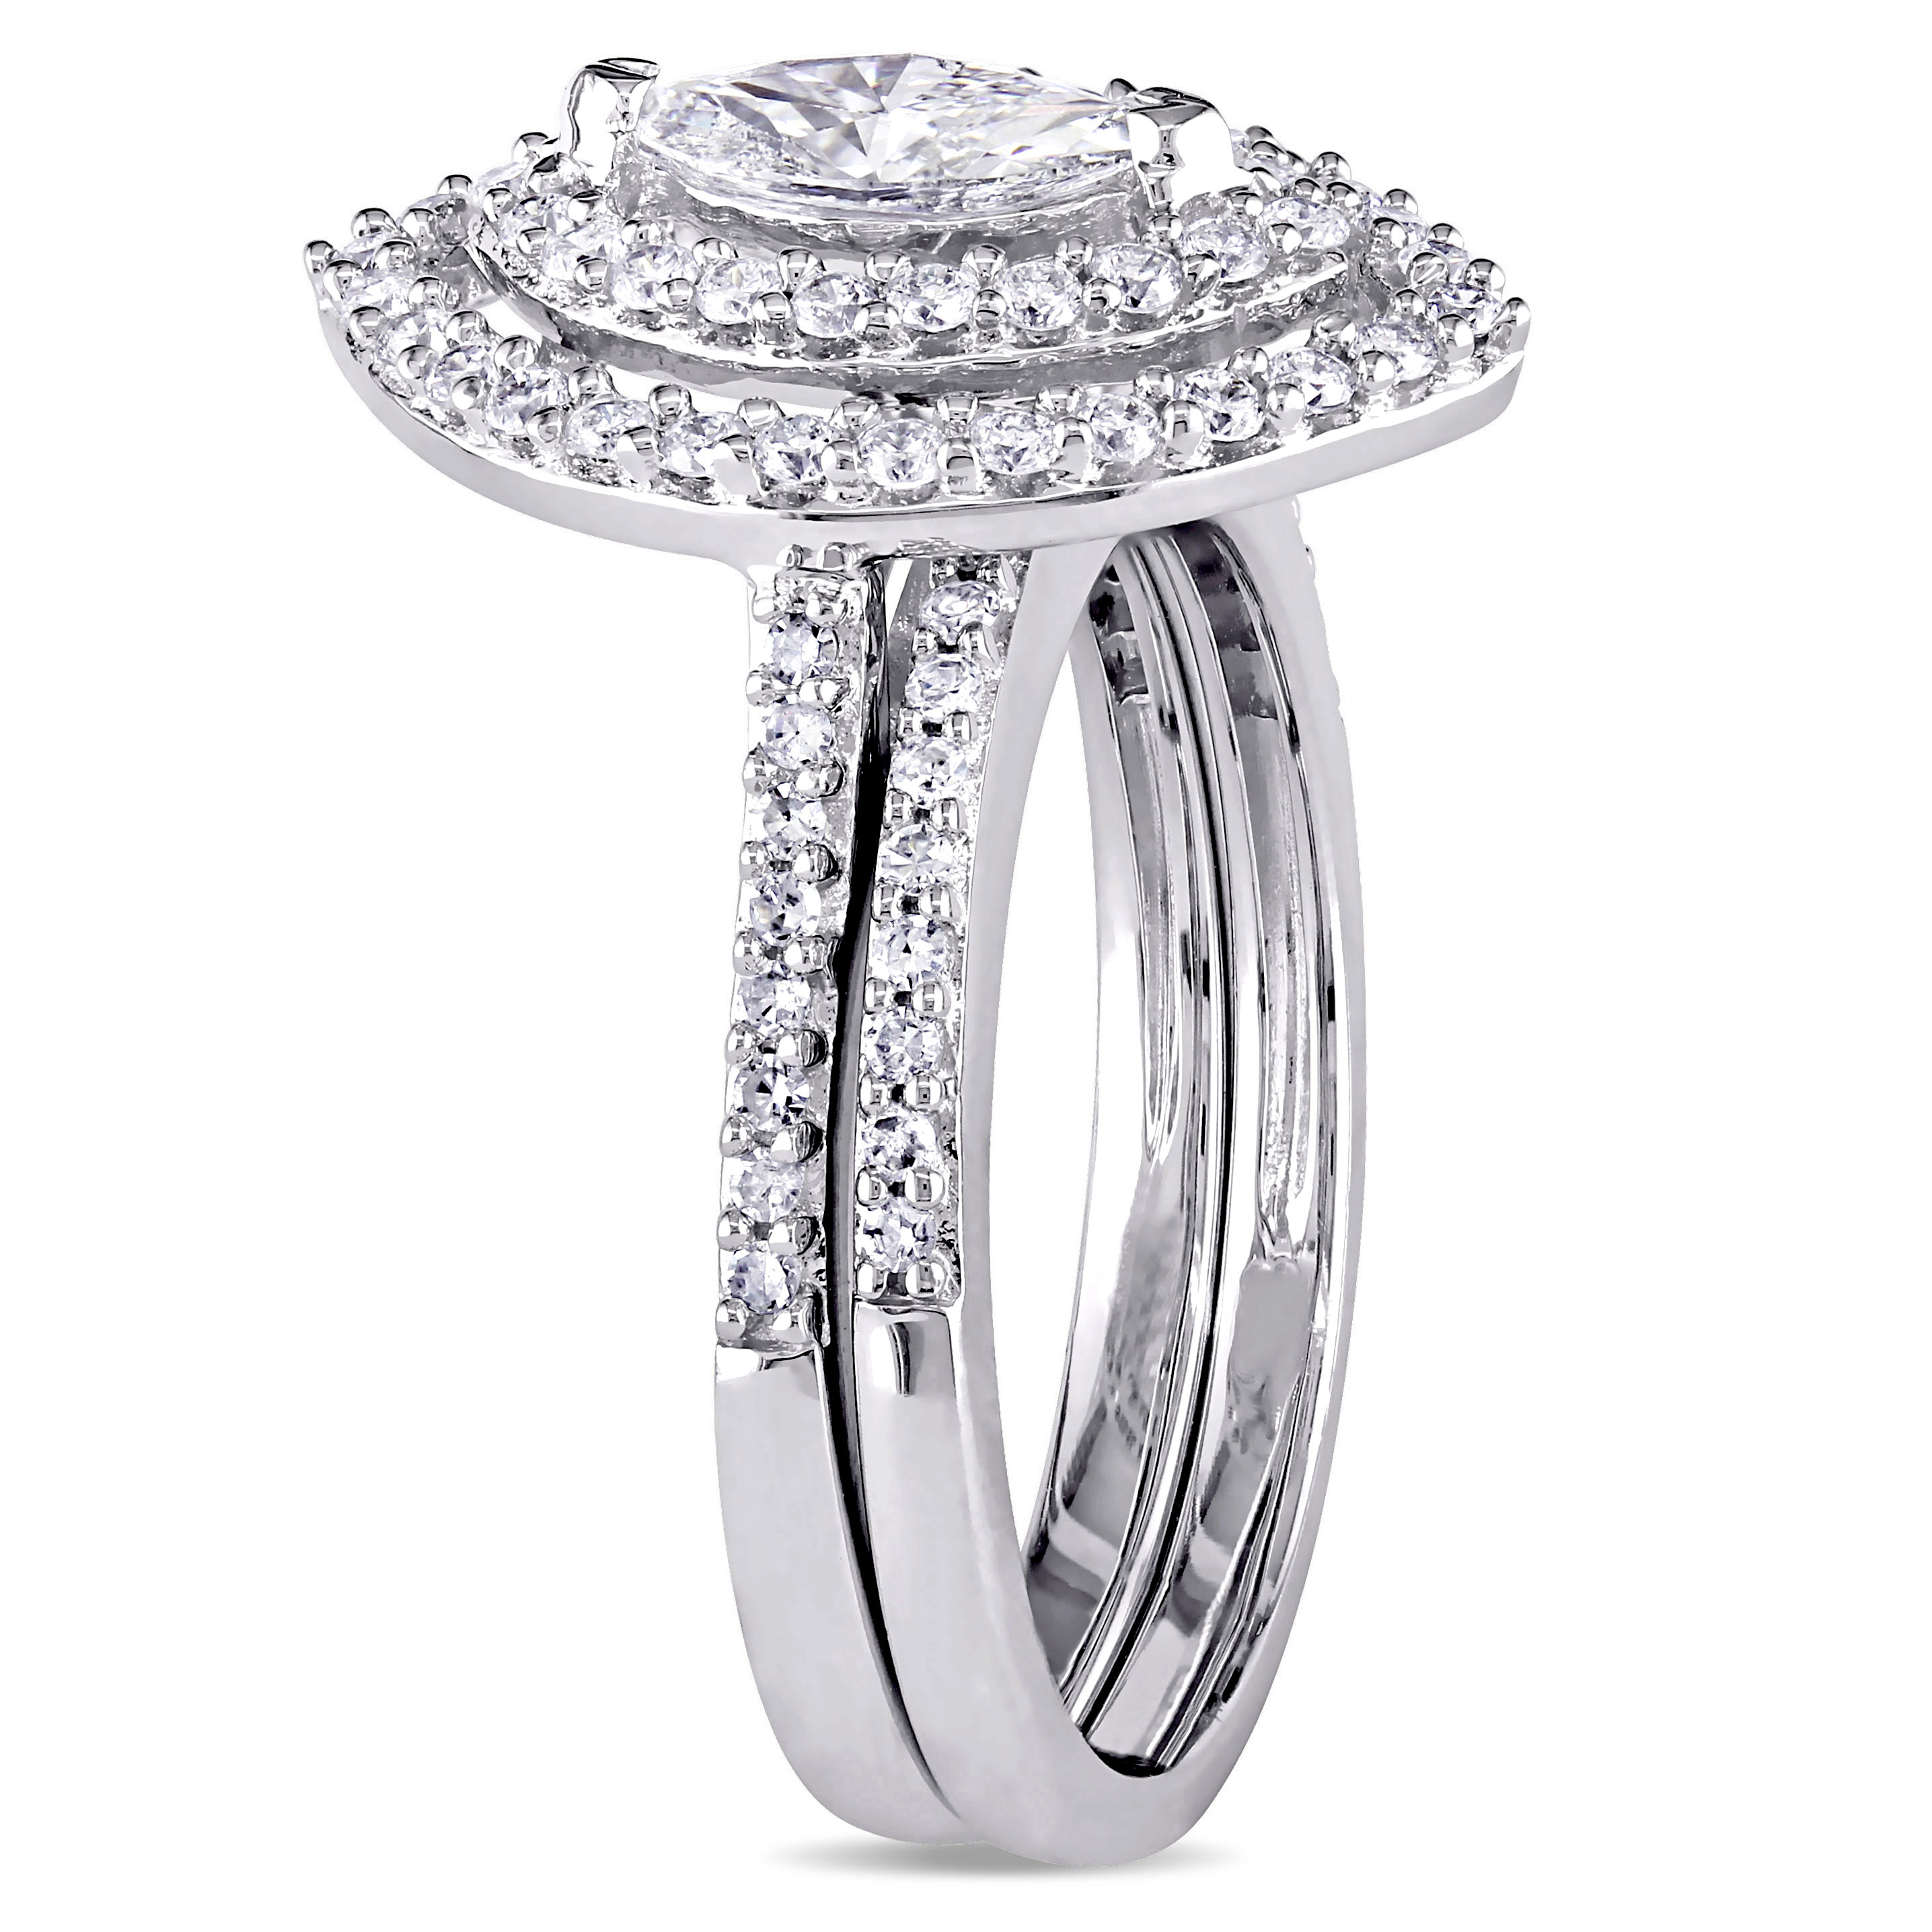 1 CT TW Marquise Halo Diamond Bridal Set in 14k White Gold